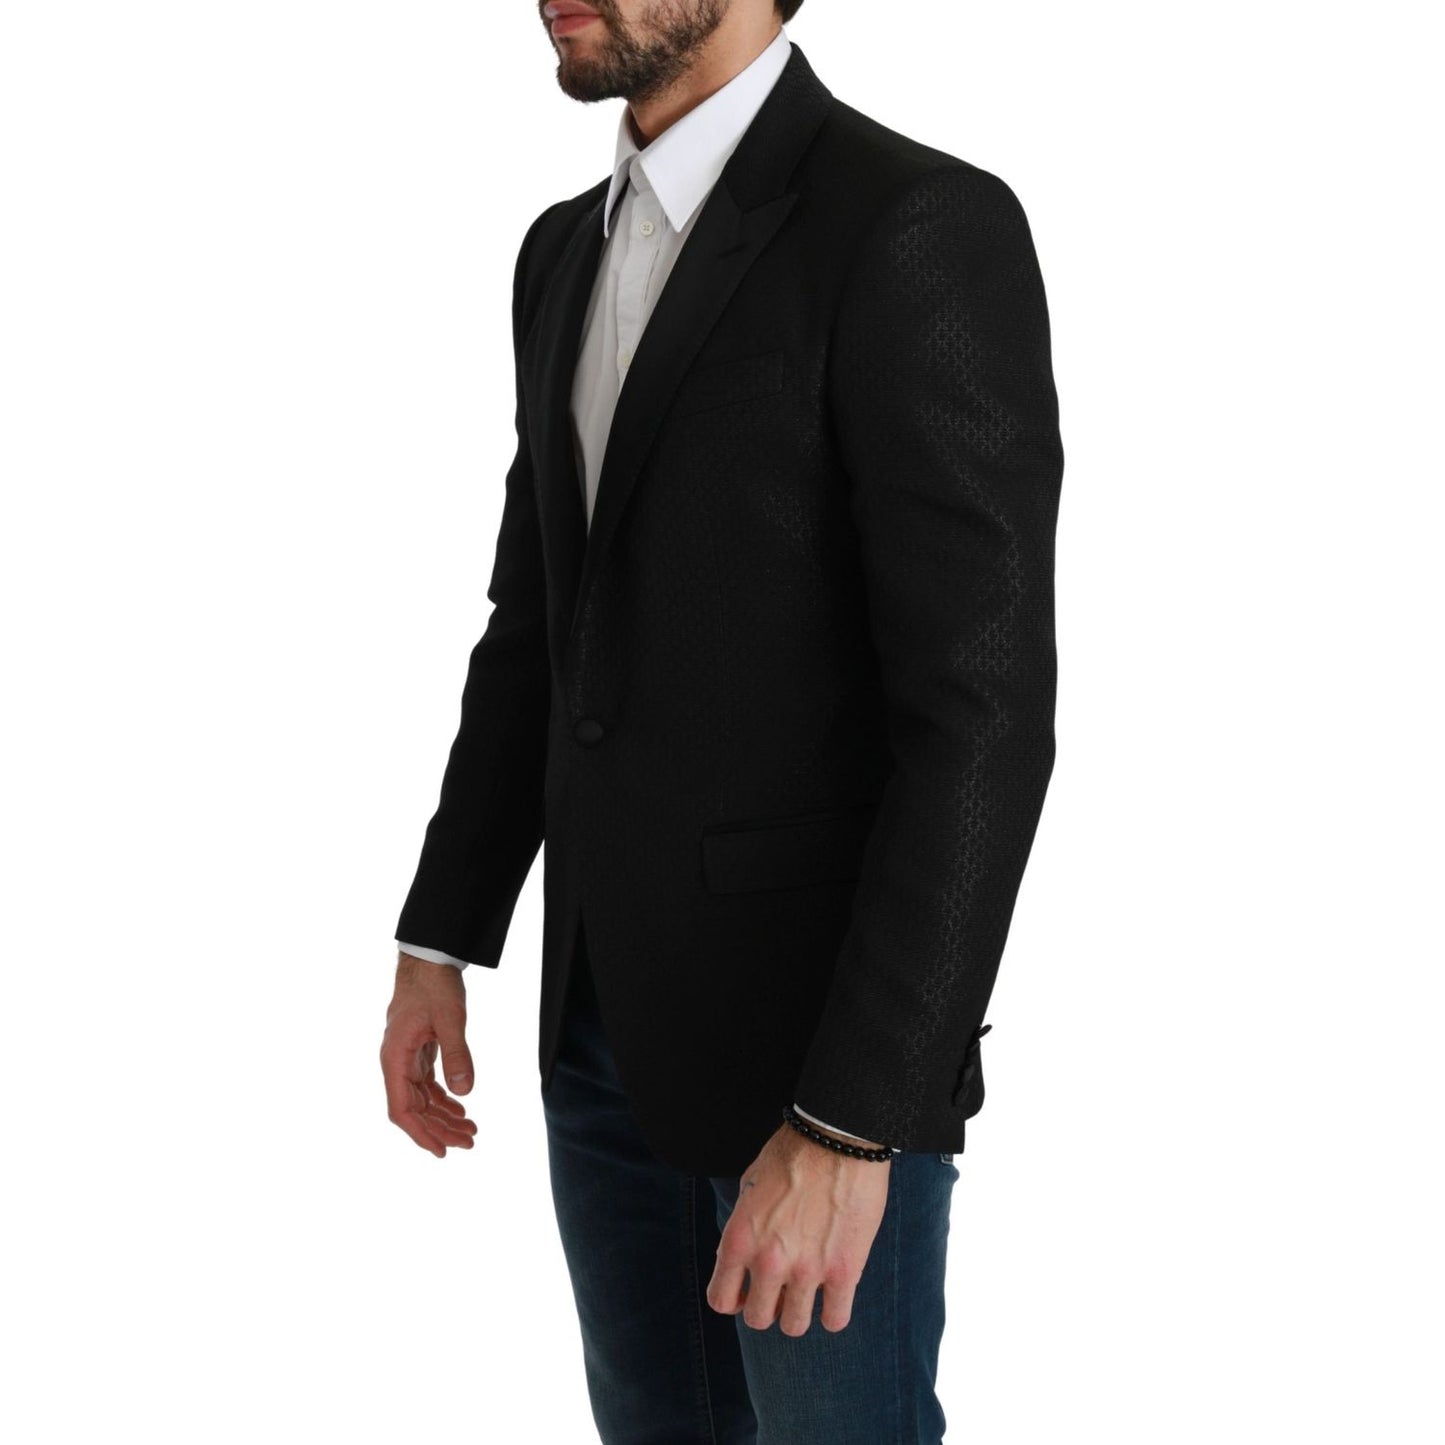 Dolce & Gabbana Slim Fit Martini Black Blazer Jacket black-slim-fit-jacket-martini-blazer Suit IMG_1014-scaled-fec8fc2e-4a2.jpg